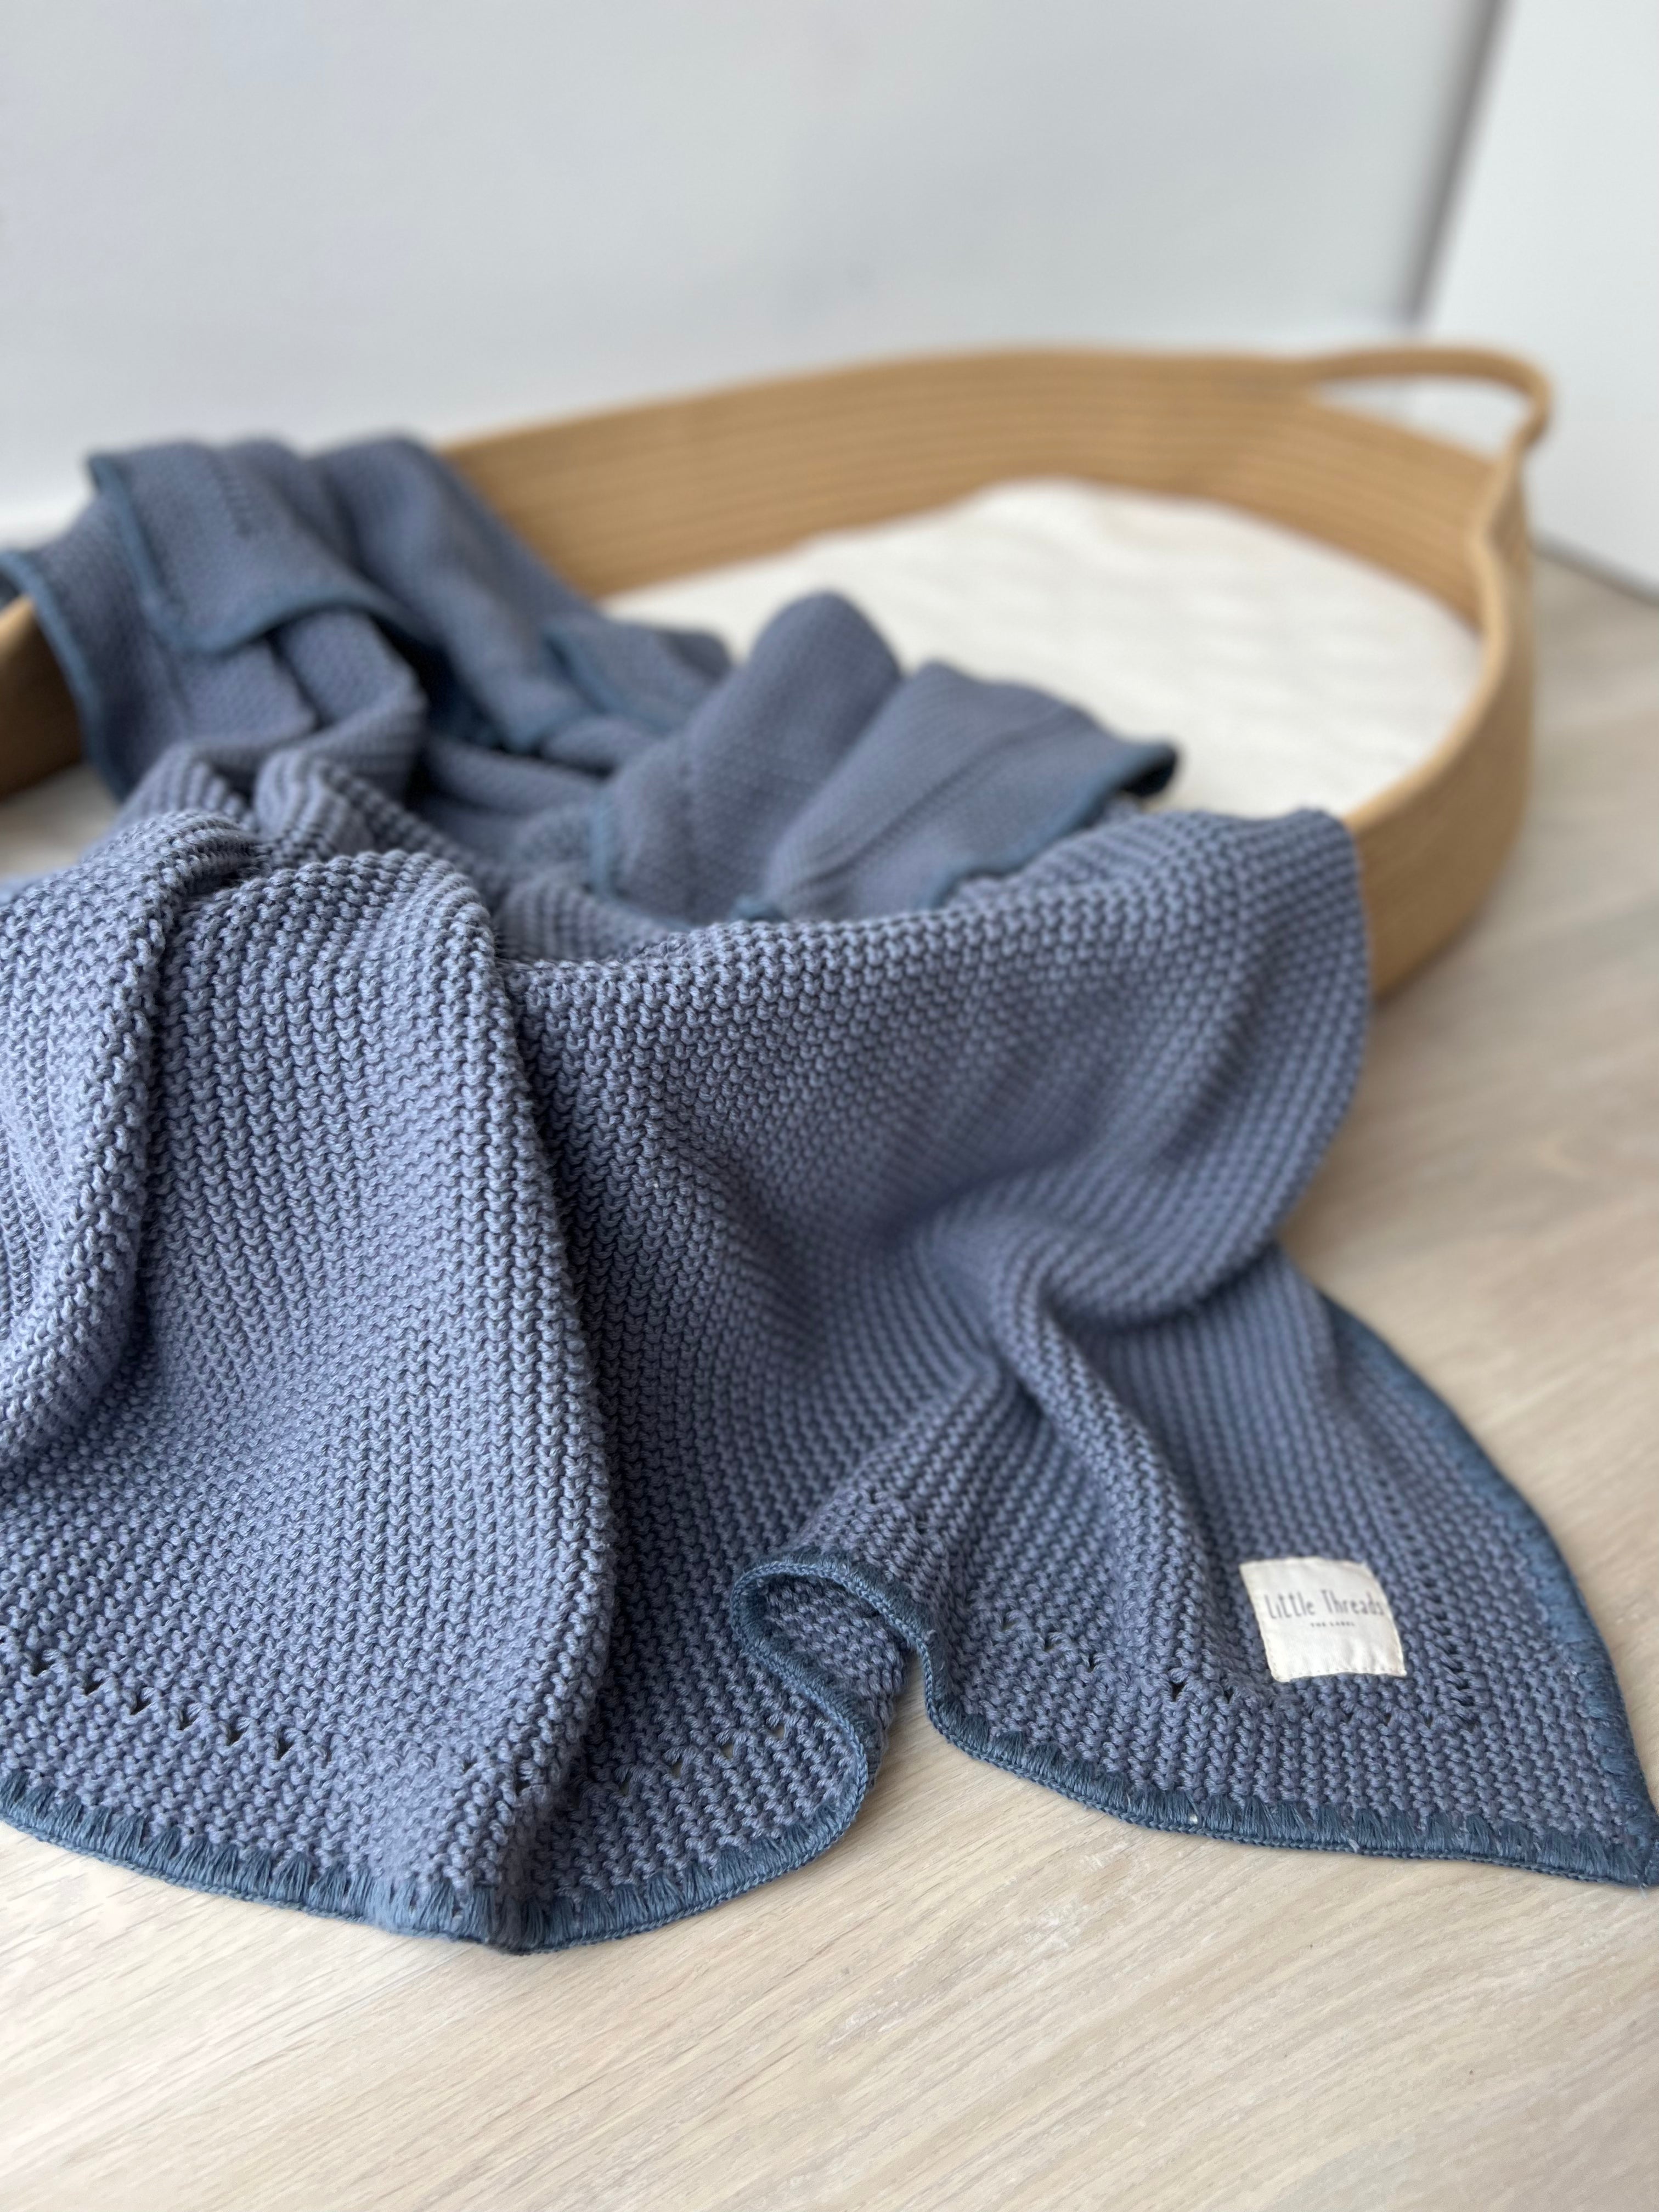 Slate Blue Knitted Cotton Blanket